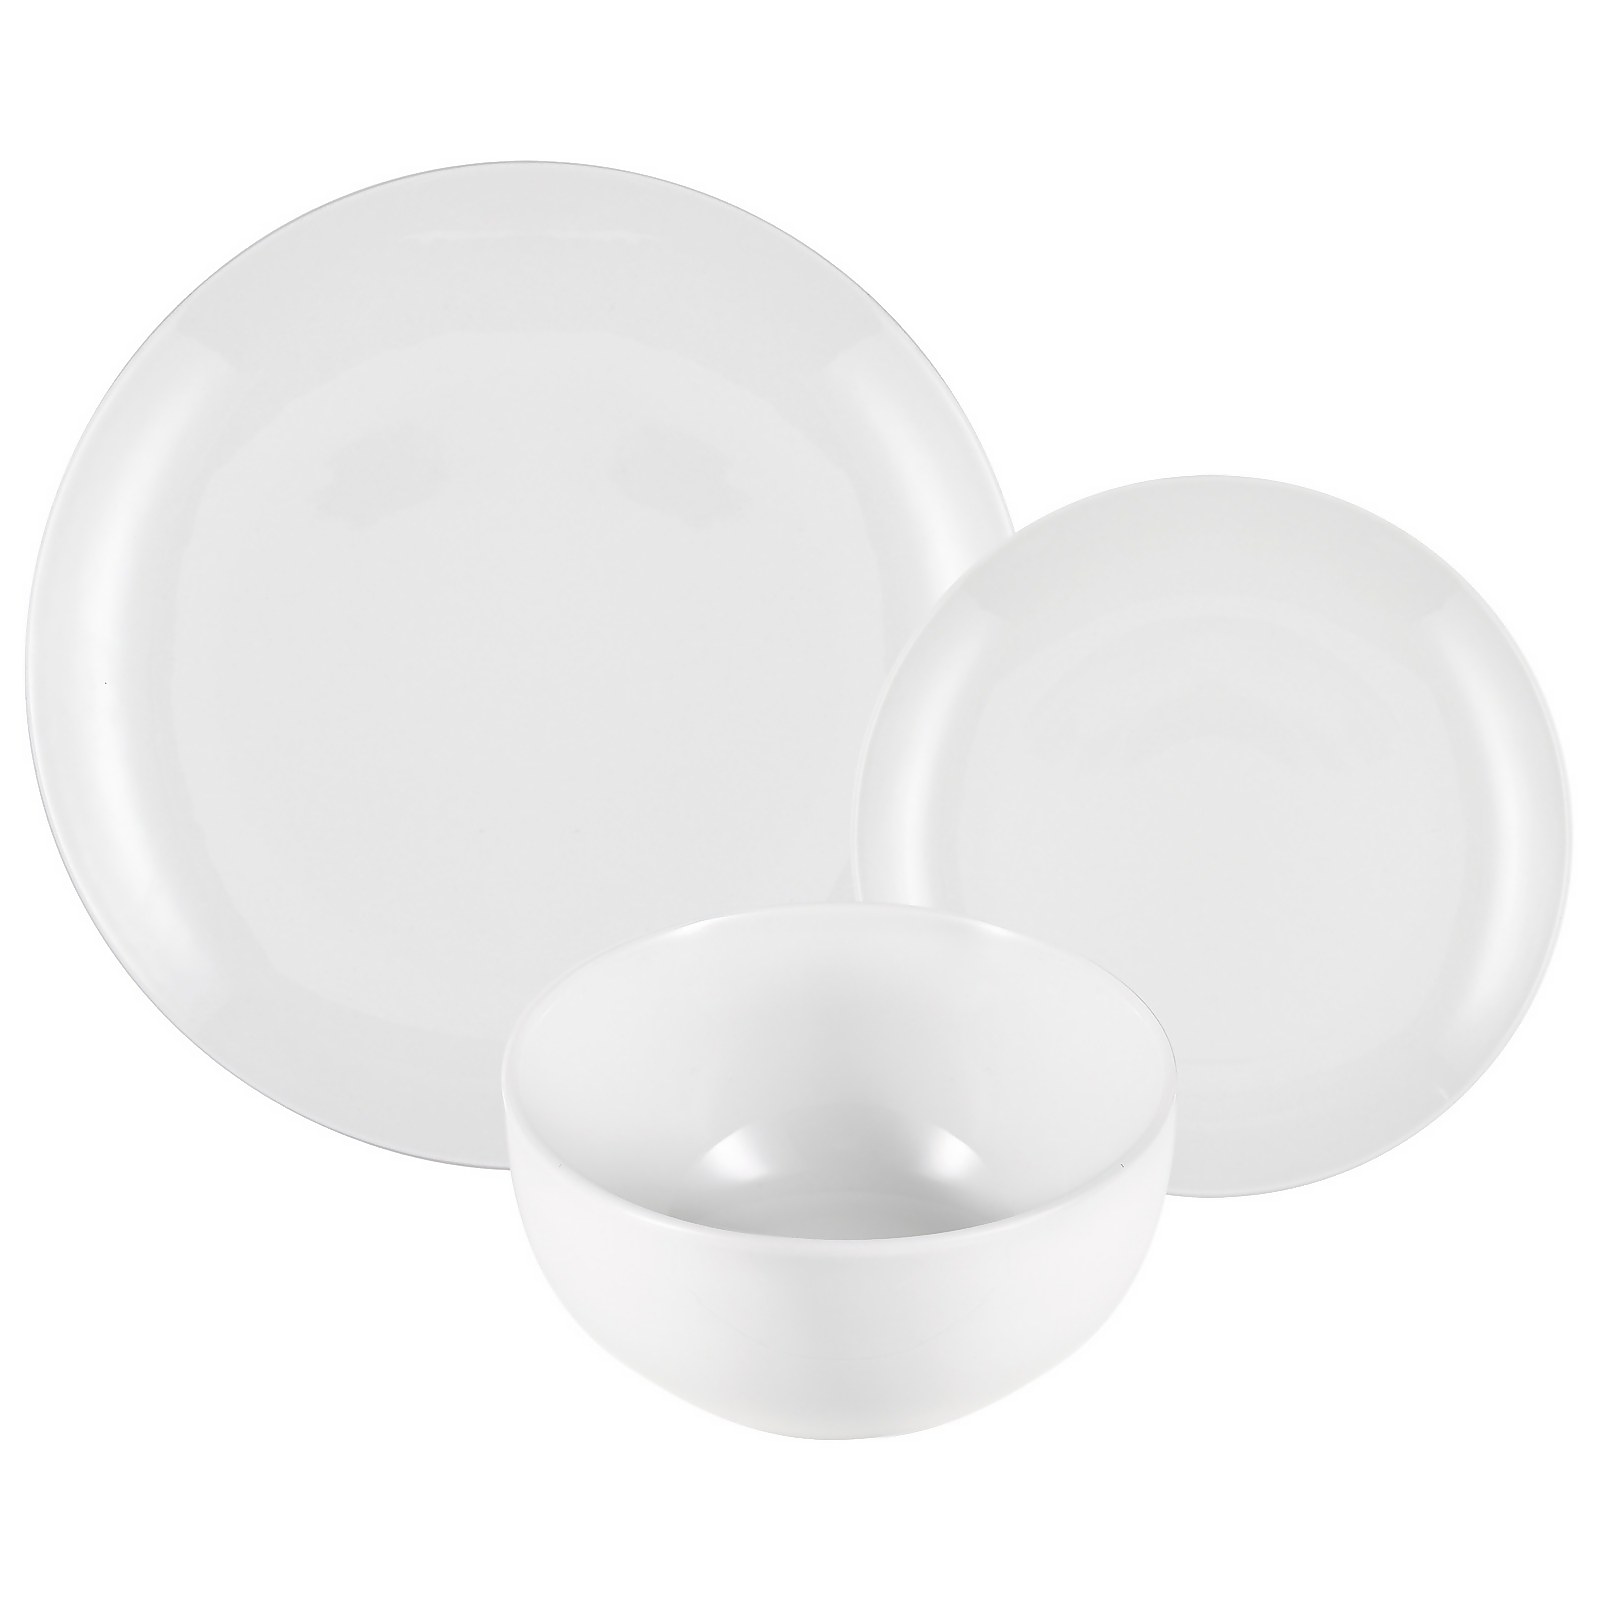 Photo of Prep & Cook 12 Piece Dinnerware Set - Porcelain White